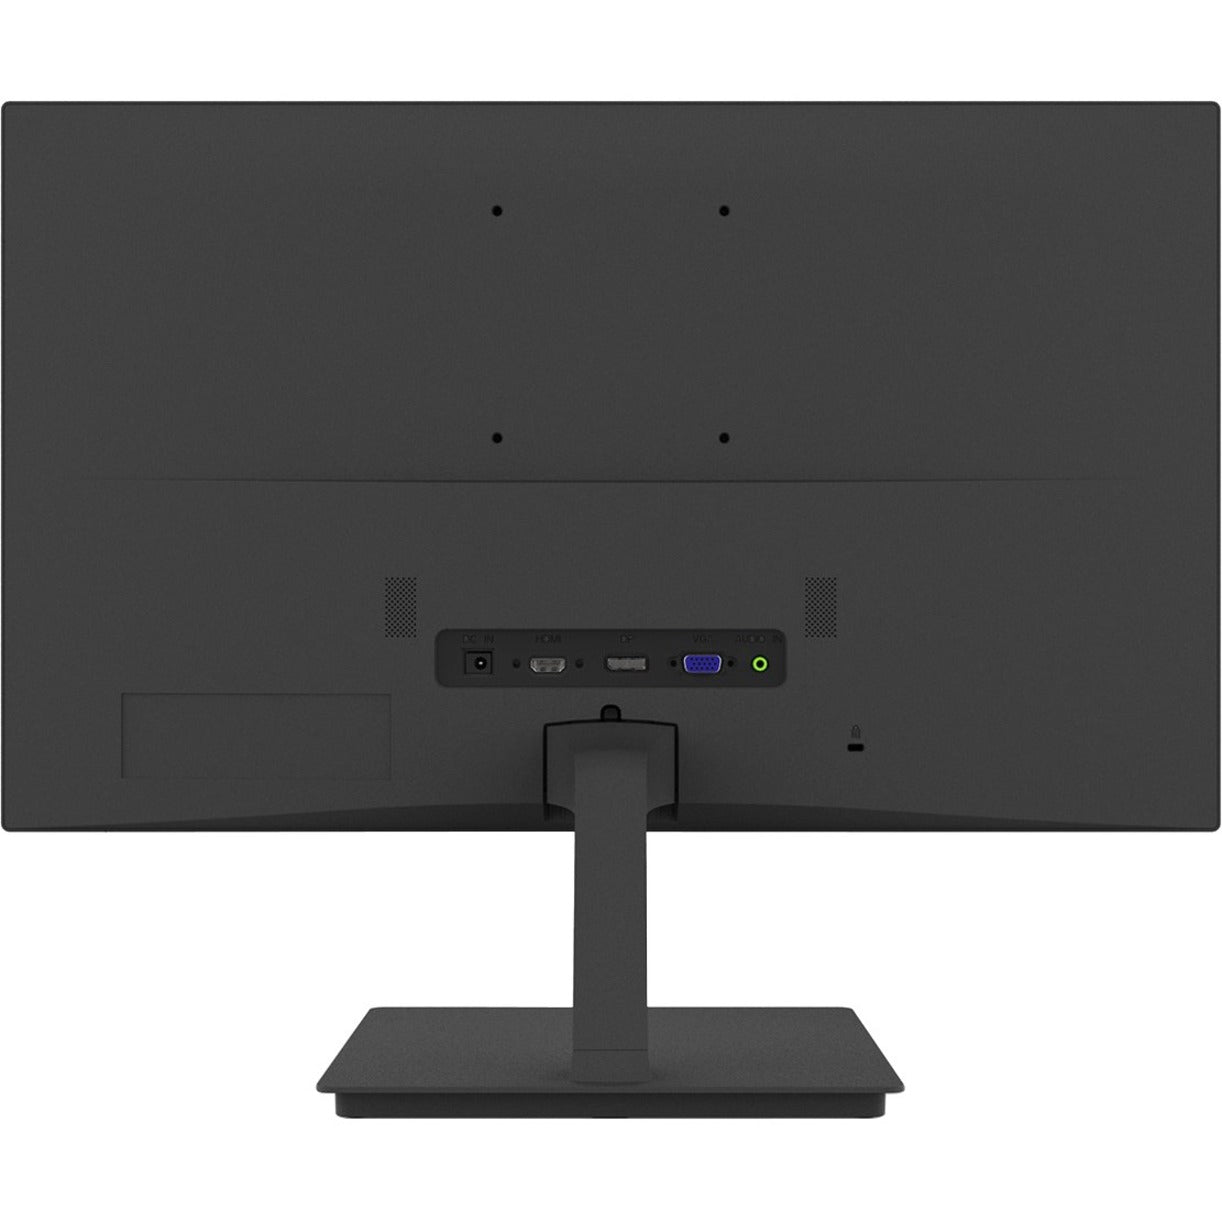 Planar PXN2480MW 23.8" Full HD LCD Monitor - 16:9 - Black